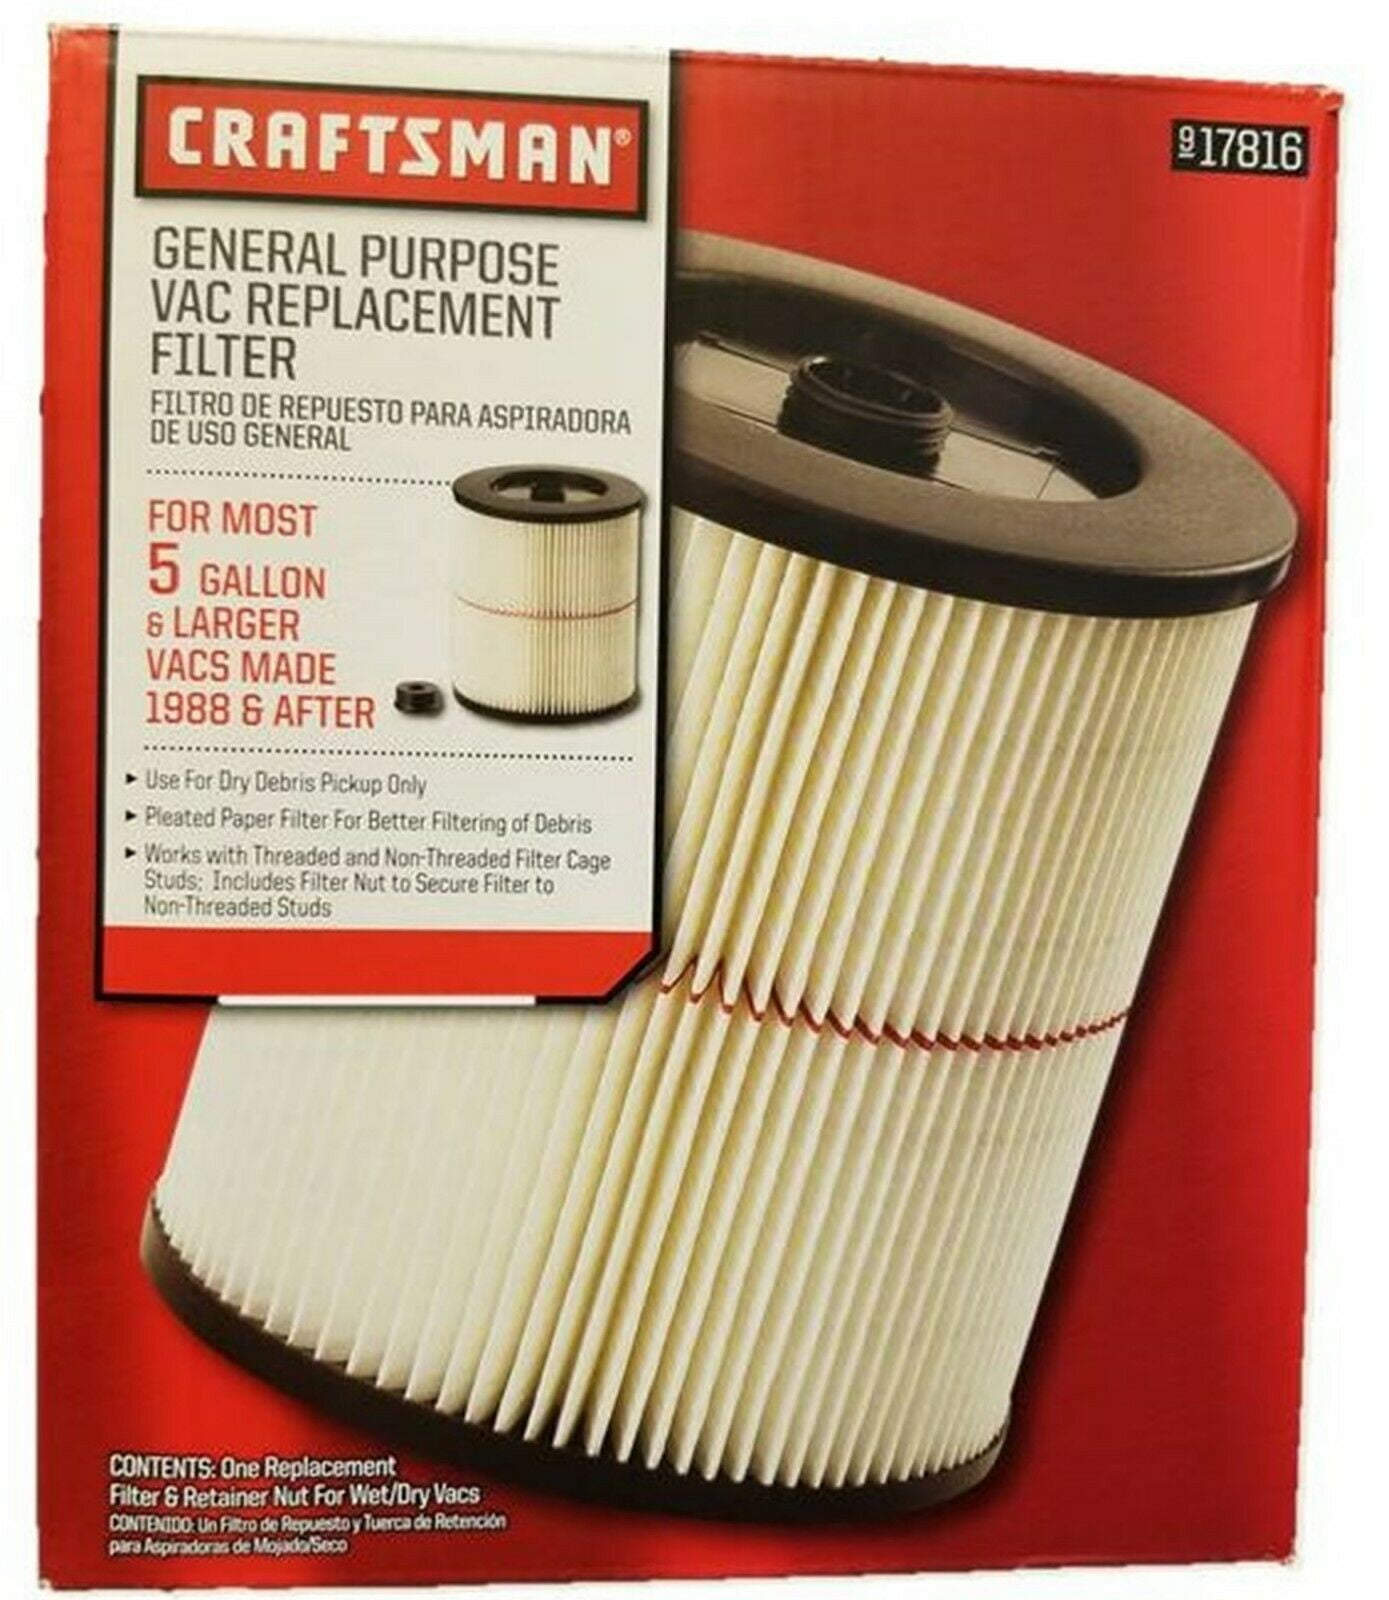 1x Air Filter Cartridge For Shop Vac Craftsman 17816 9-17816 5,6,9,12,16 Gallon 